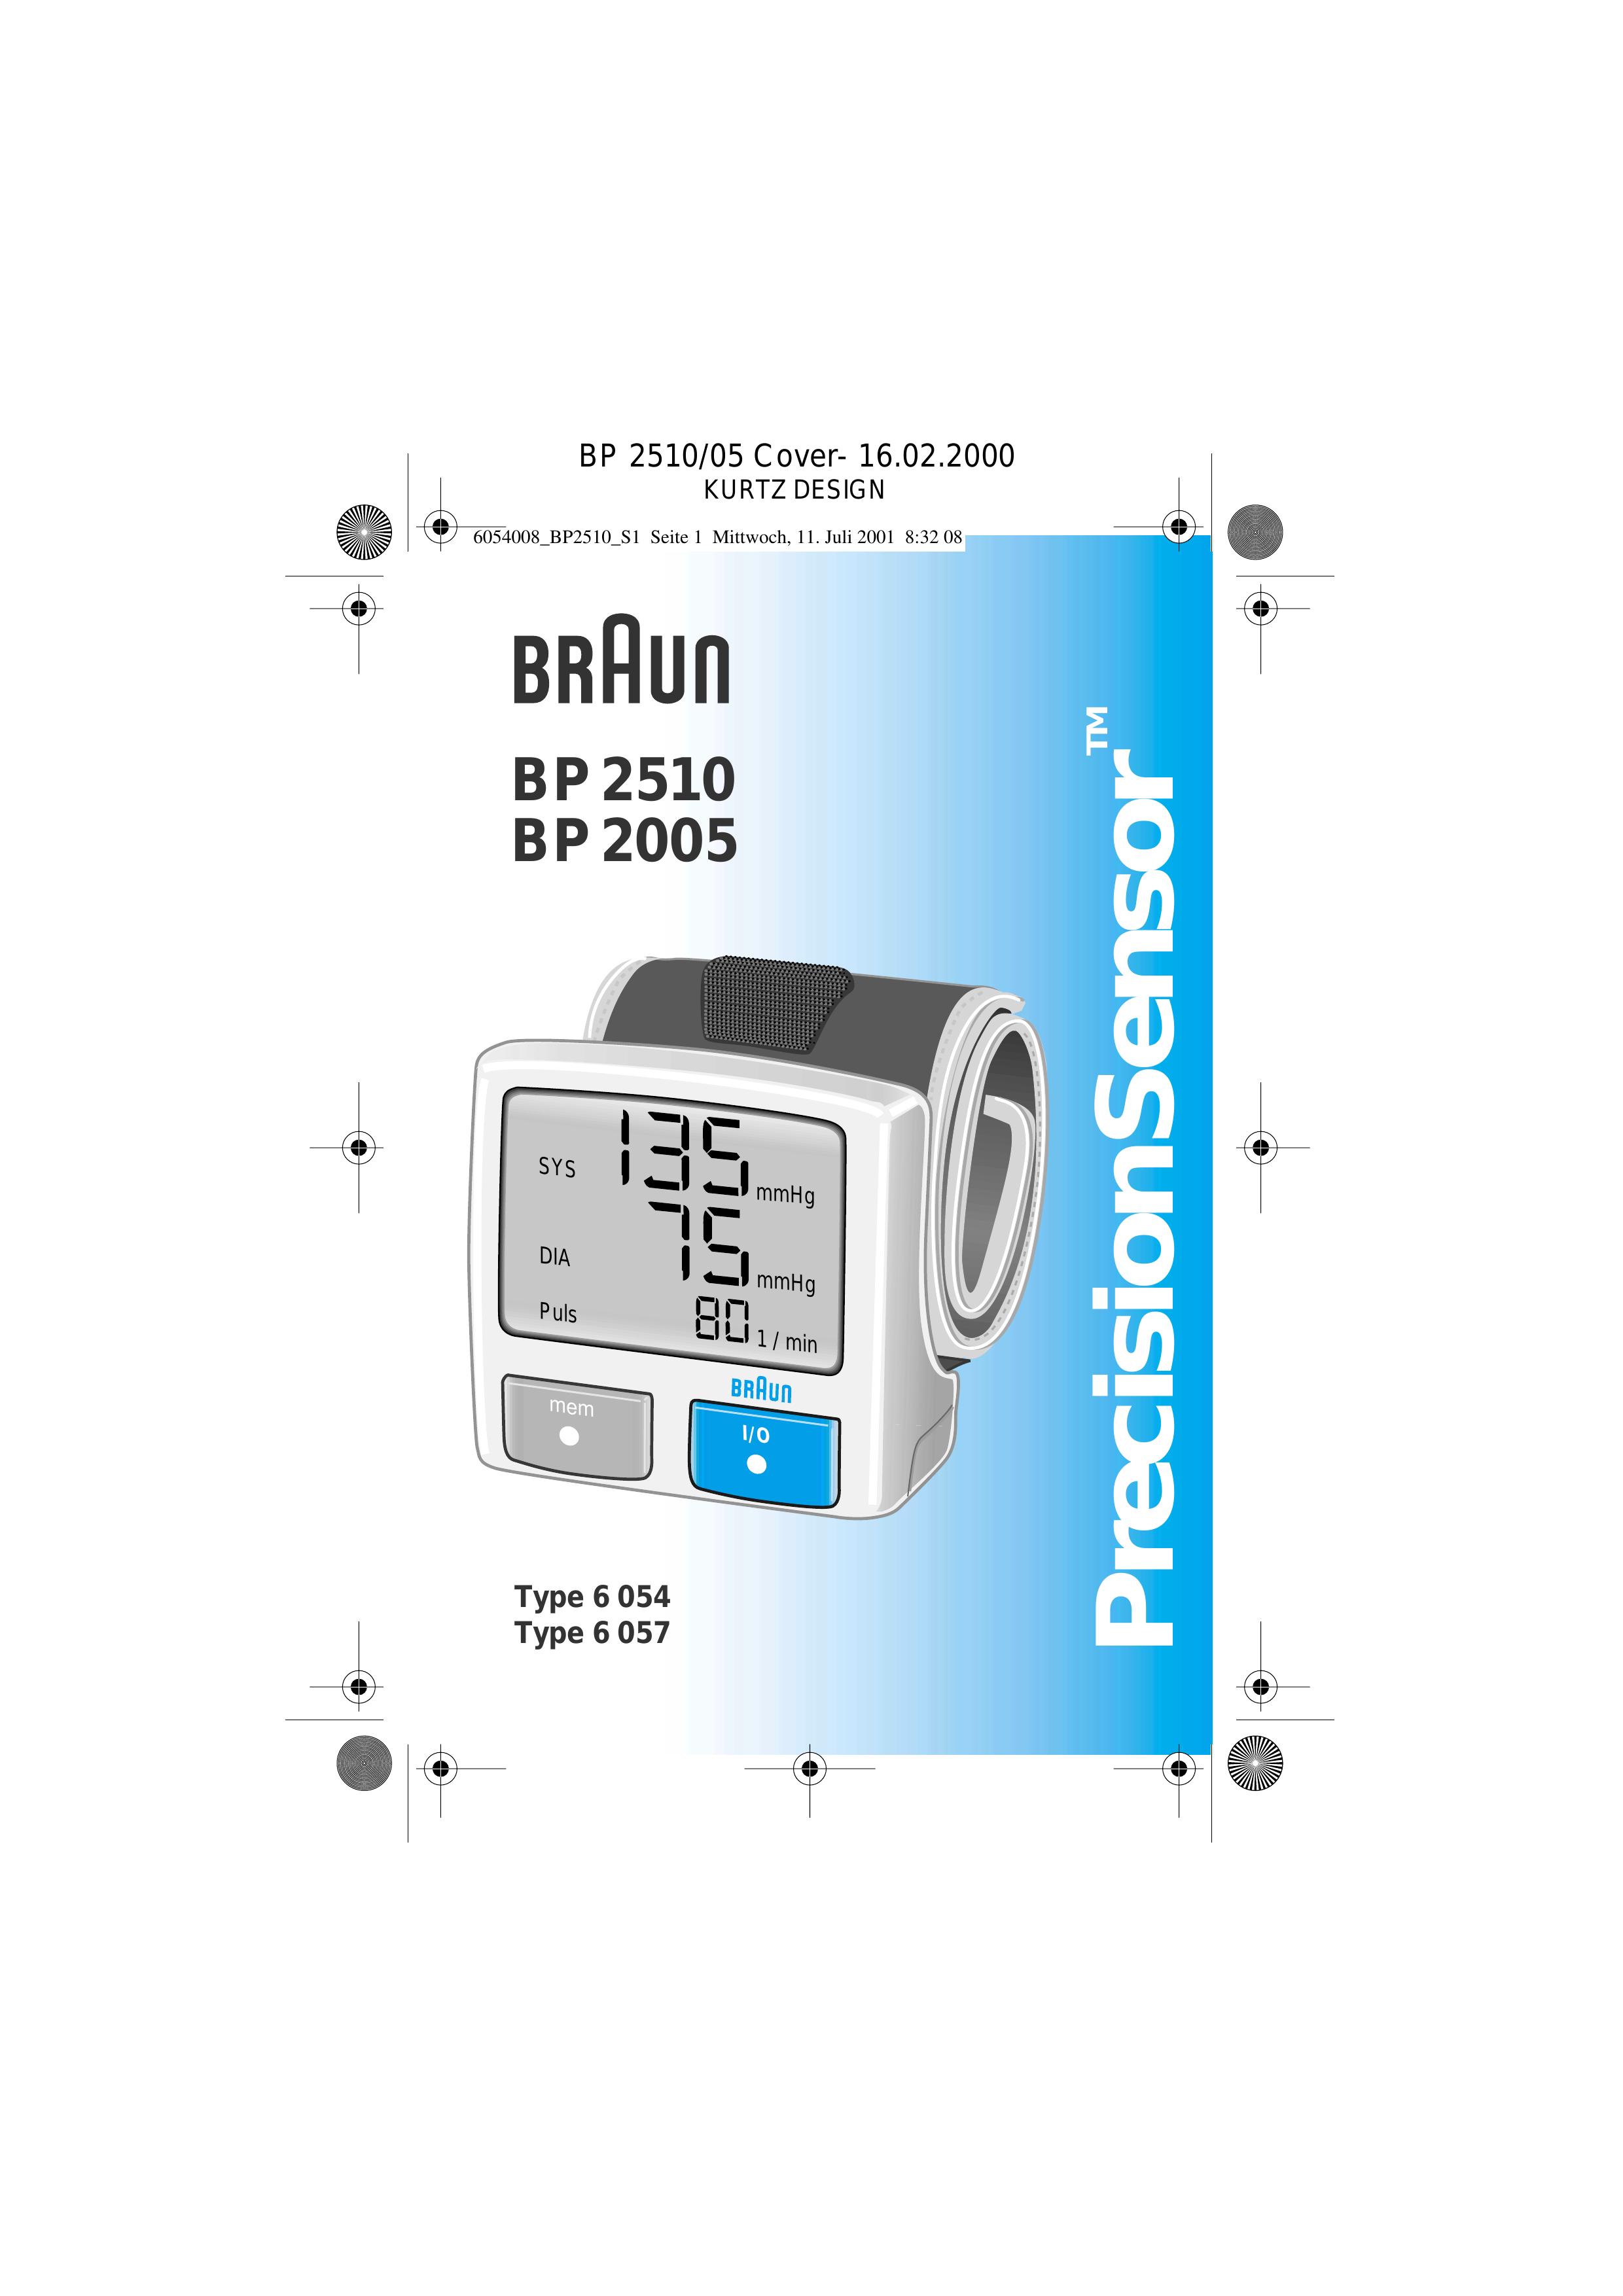 Braun BP 2510 Blood Pressure Monitor User Manual